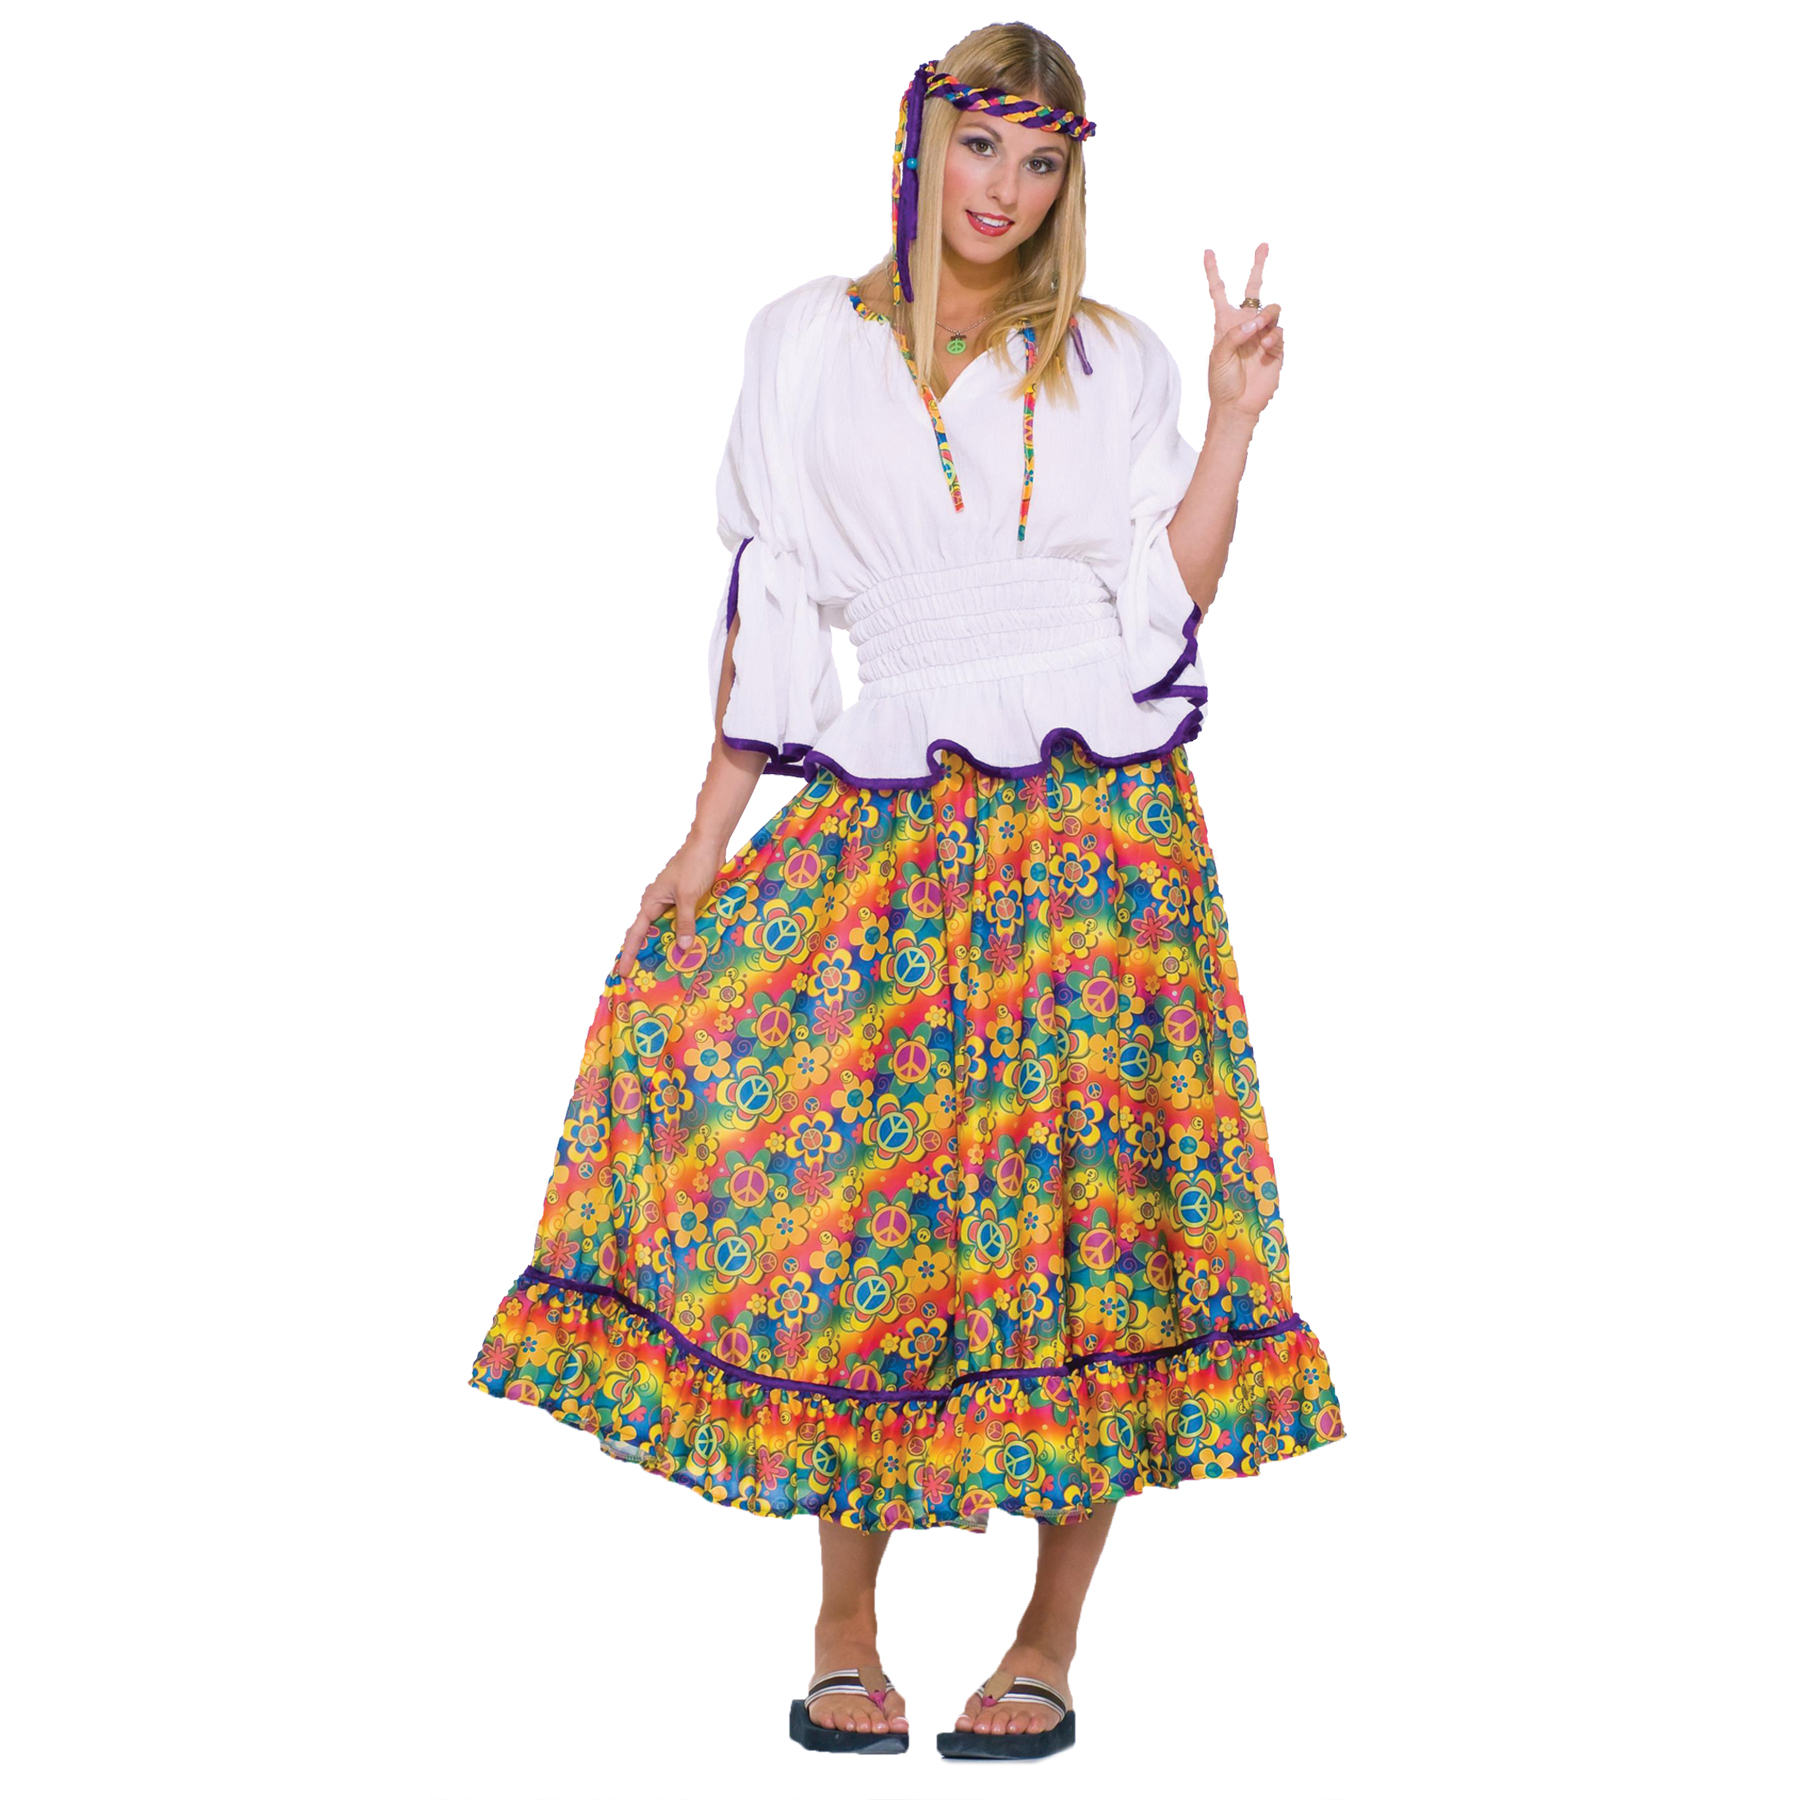 Women's Woodstock Girl Costume